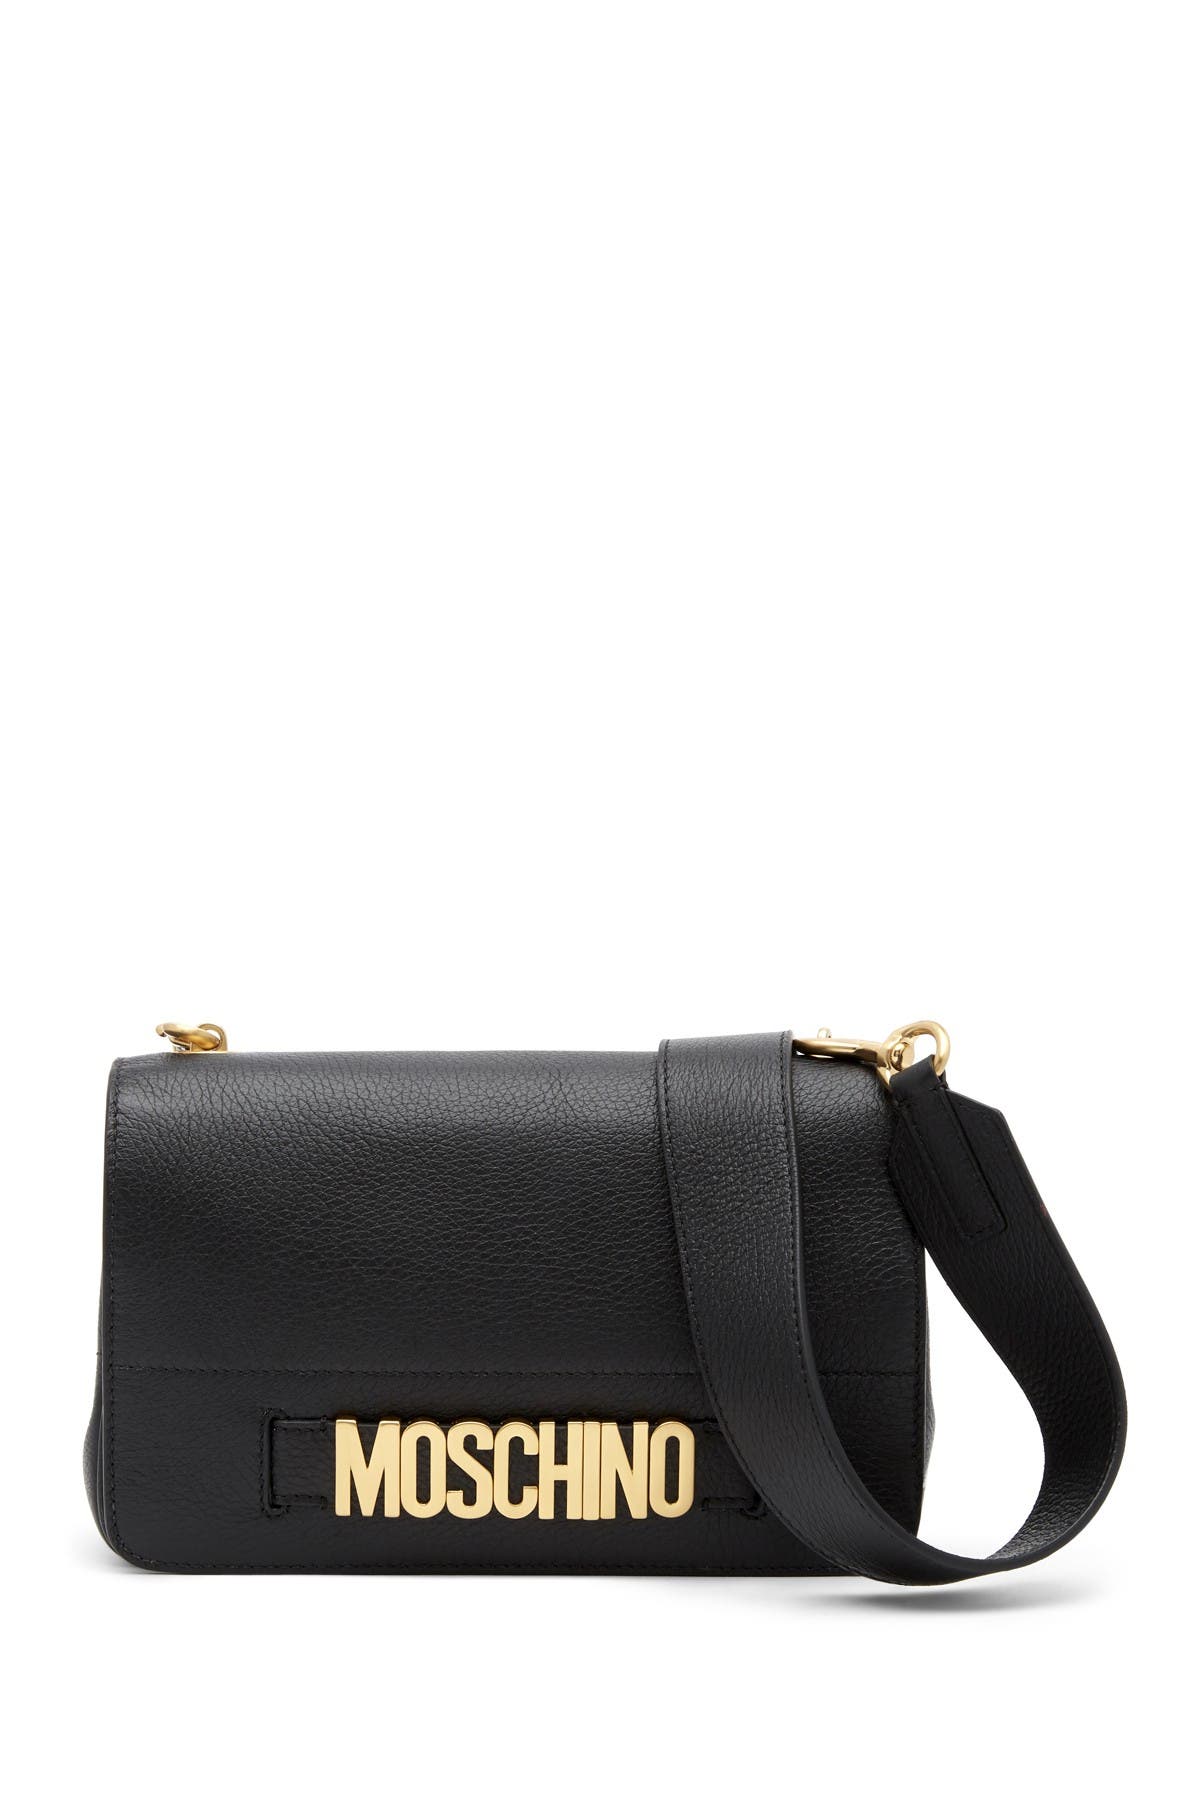 MOSCHINO | Logo Leather Crossbody Bag 